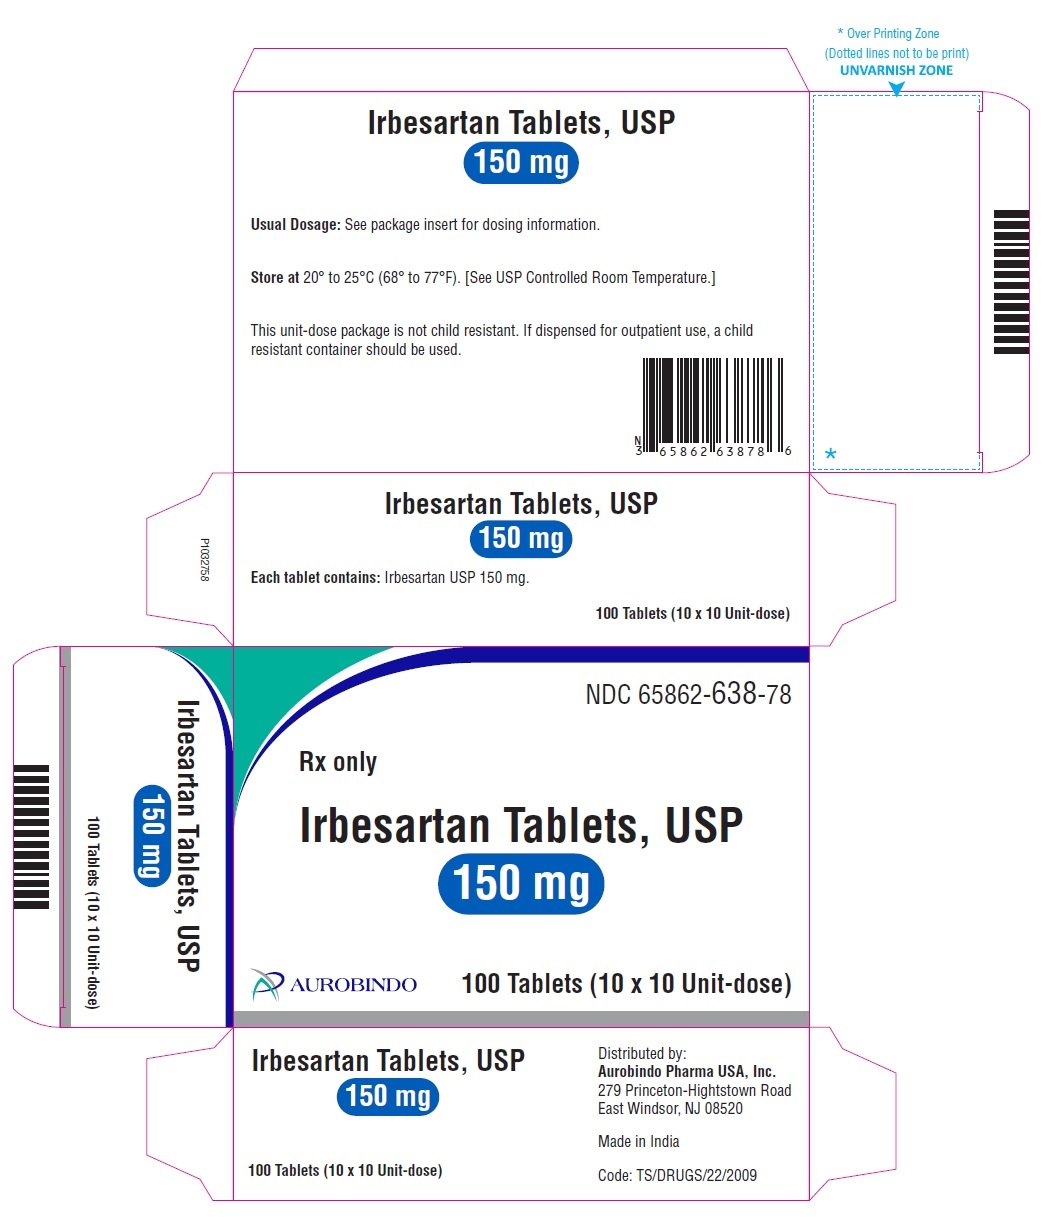 PACKAGE LABEL-PRINCIPAL DISPLAY PANEL -150 mg Blister Carton (10 x 10 Unit-dose)